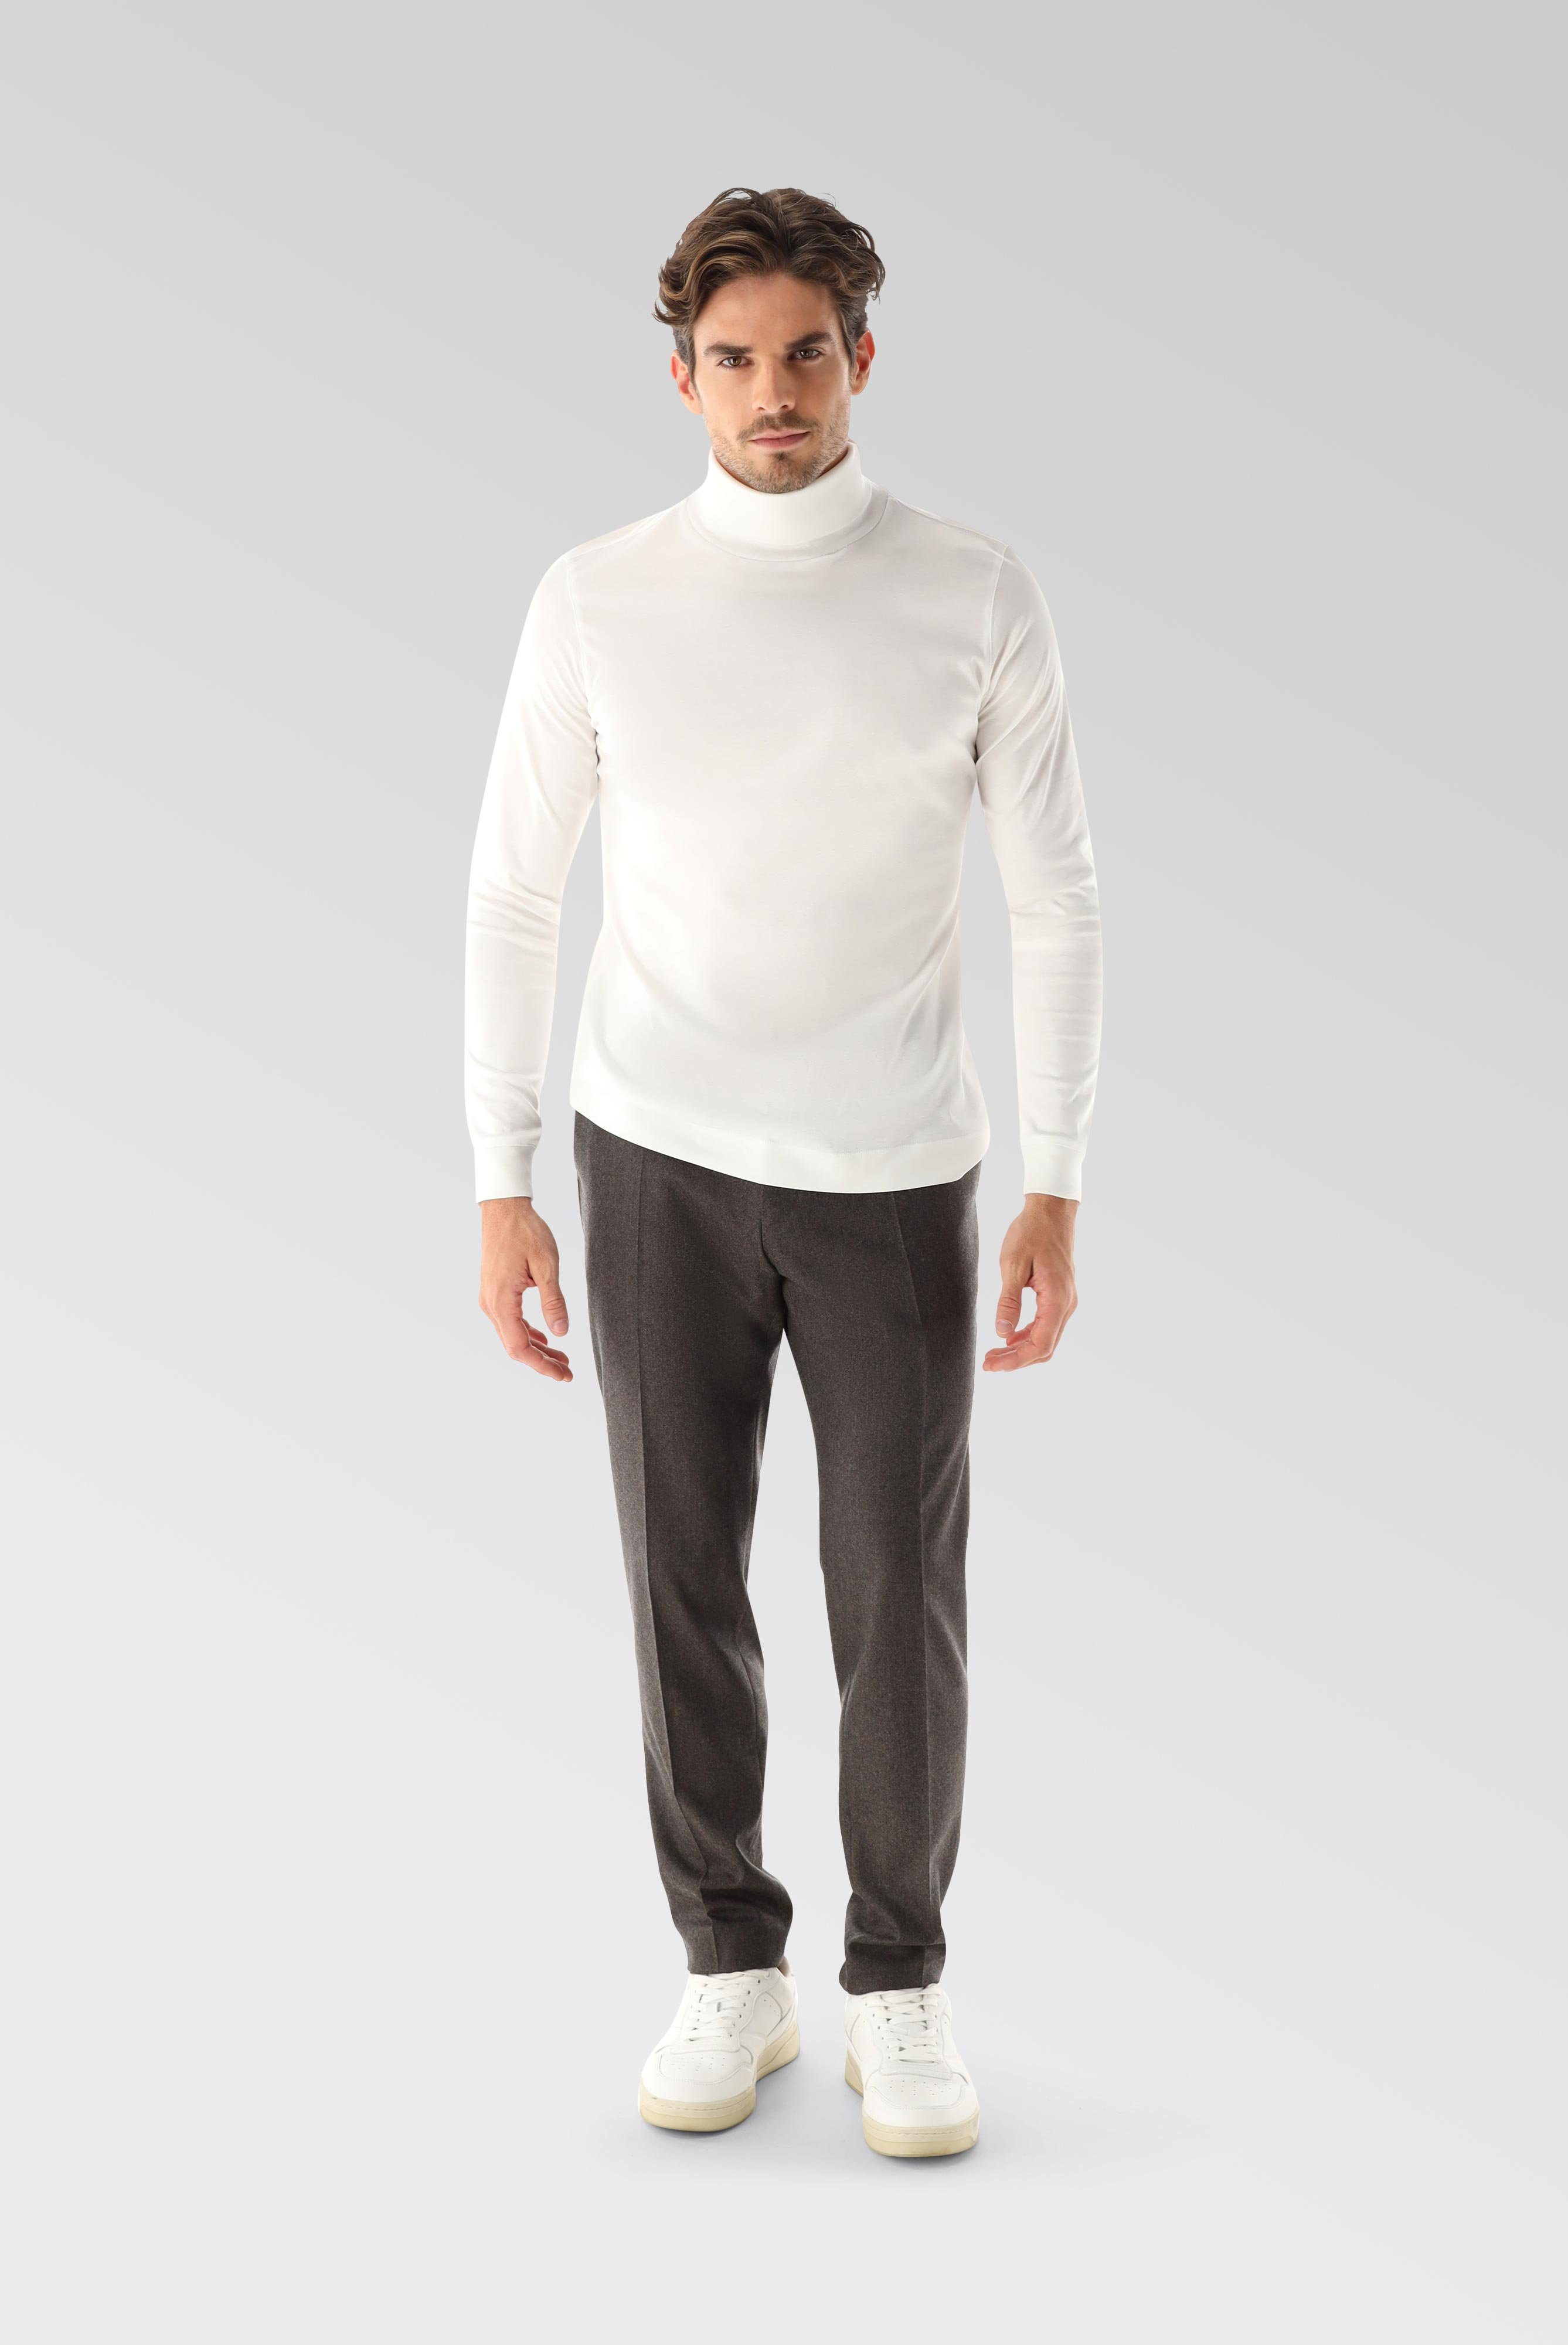 T-Shirts+Swiss Cotton Jersey Turtleneck Shirt+20.1719.UX.180031.000.S